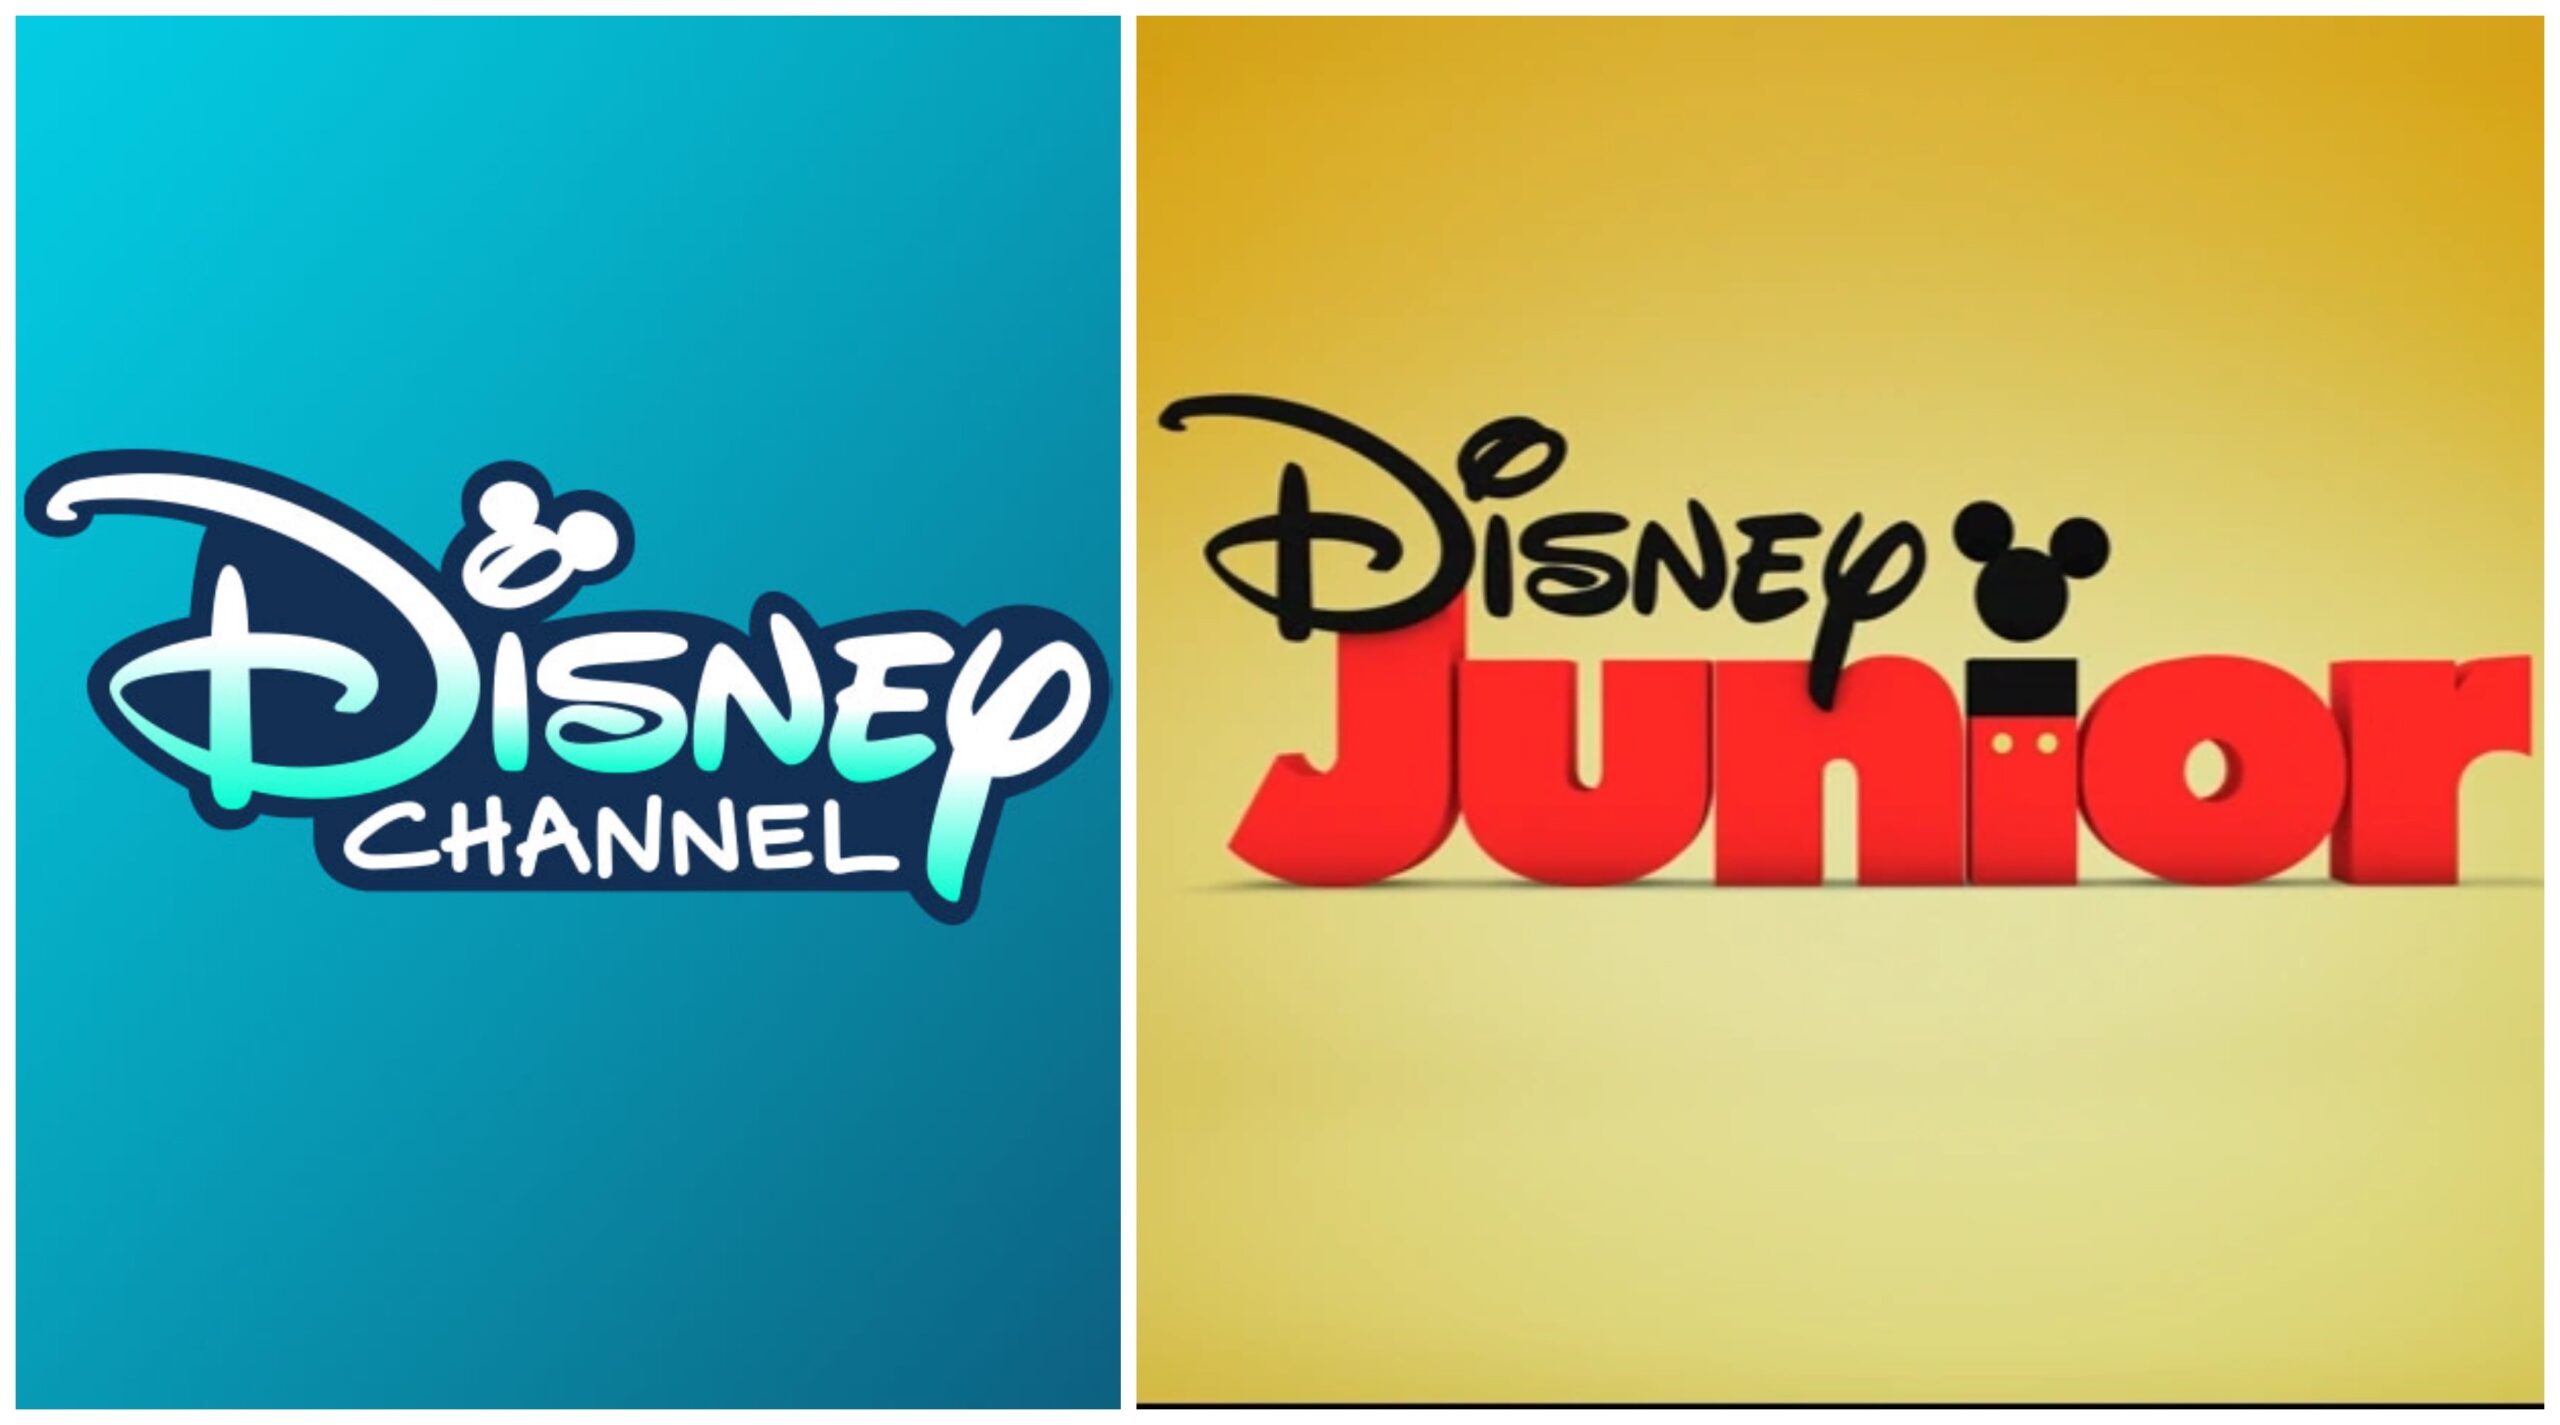 Marvel Announces New Animated Series on Disney Junior